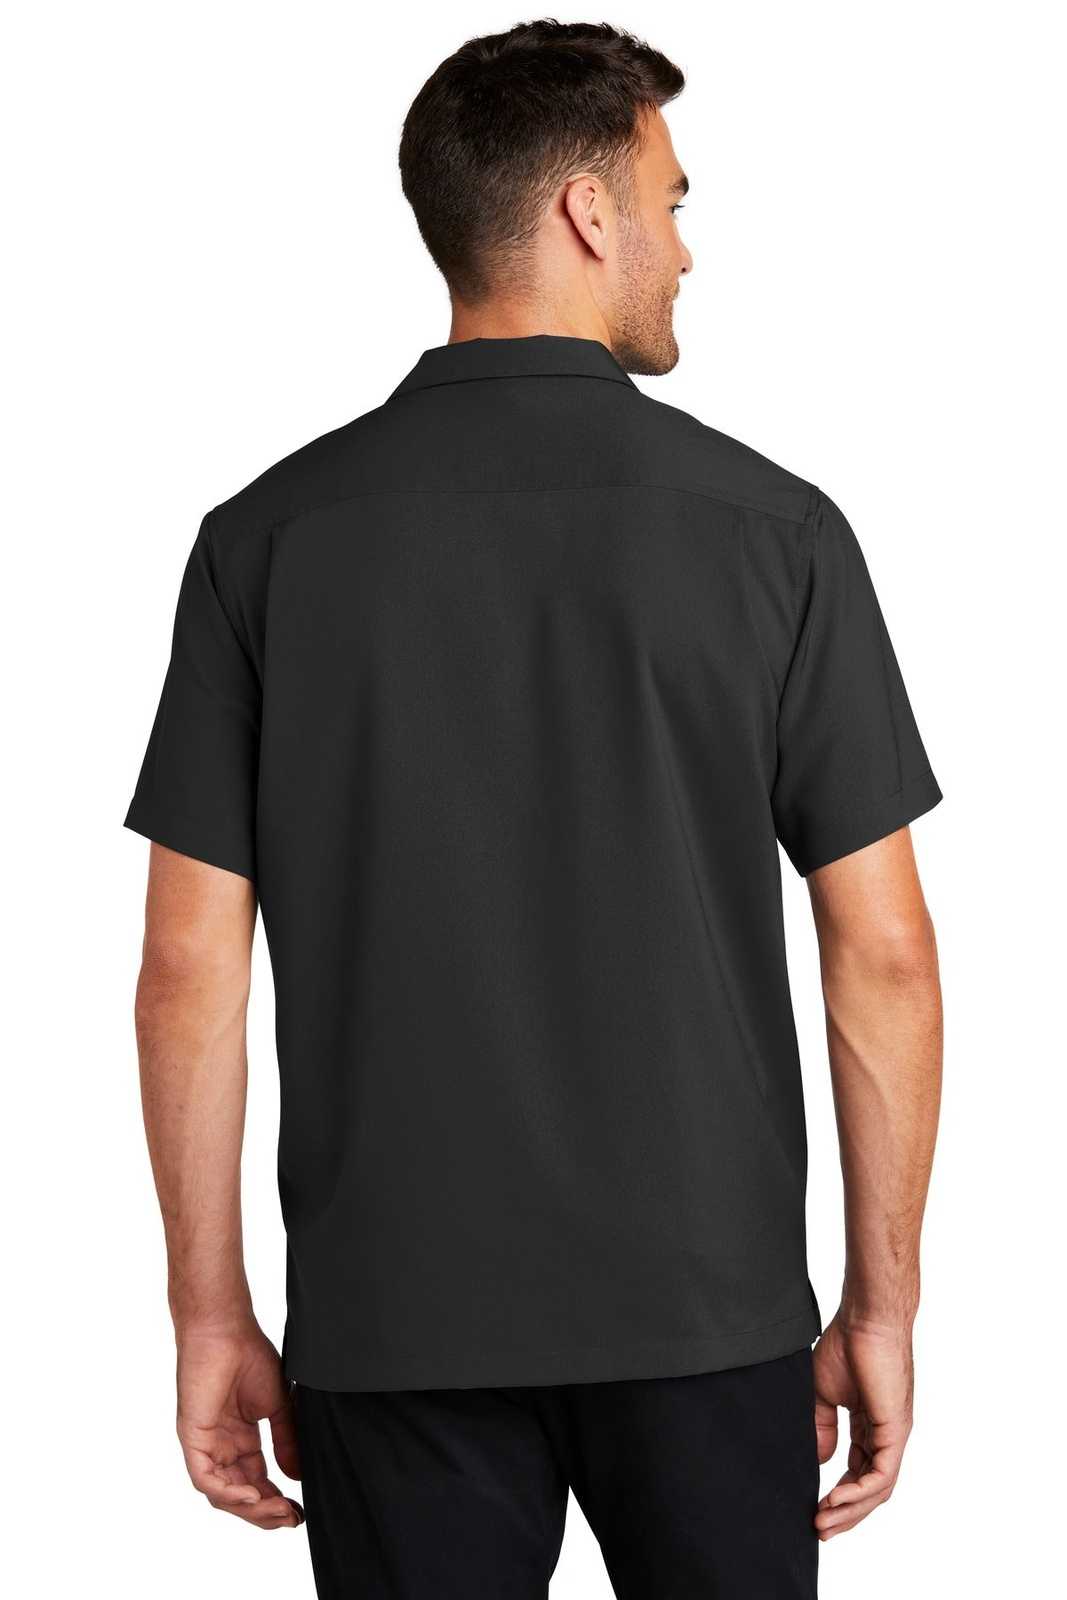 Port Authority W400 Short Sleeve Performance Staff Shirt - Black - HIT a Double - 1